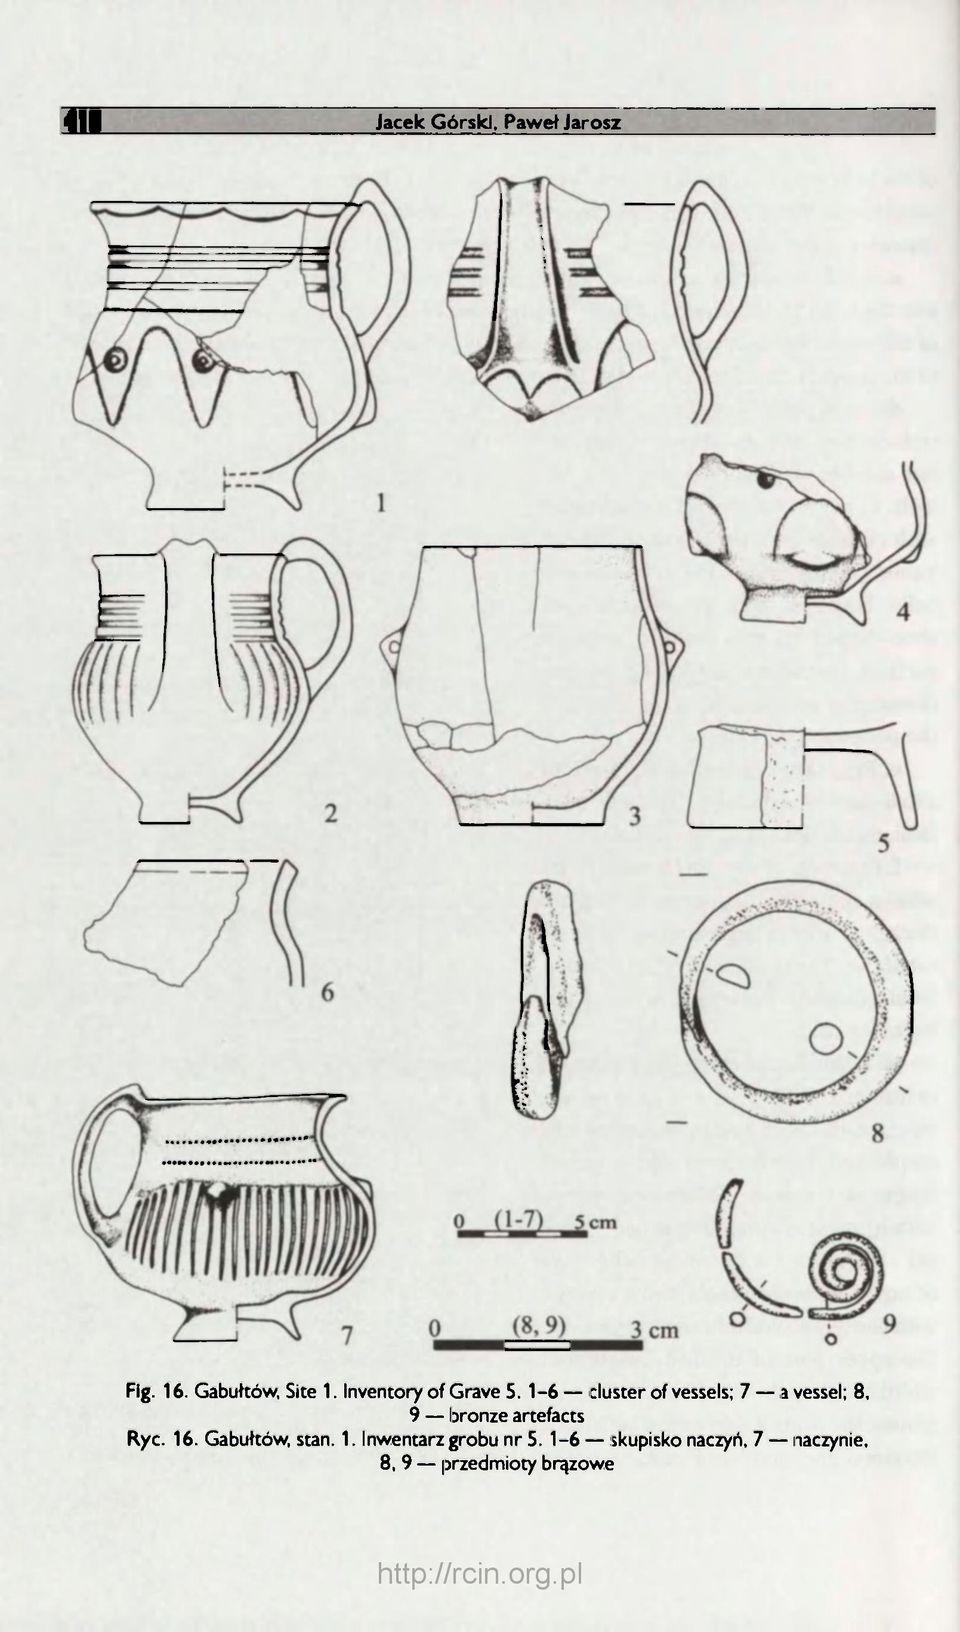 1-6 cluster of vessels; 7 a vessel; 8, 9 bronze artefacts